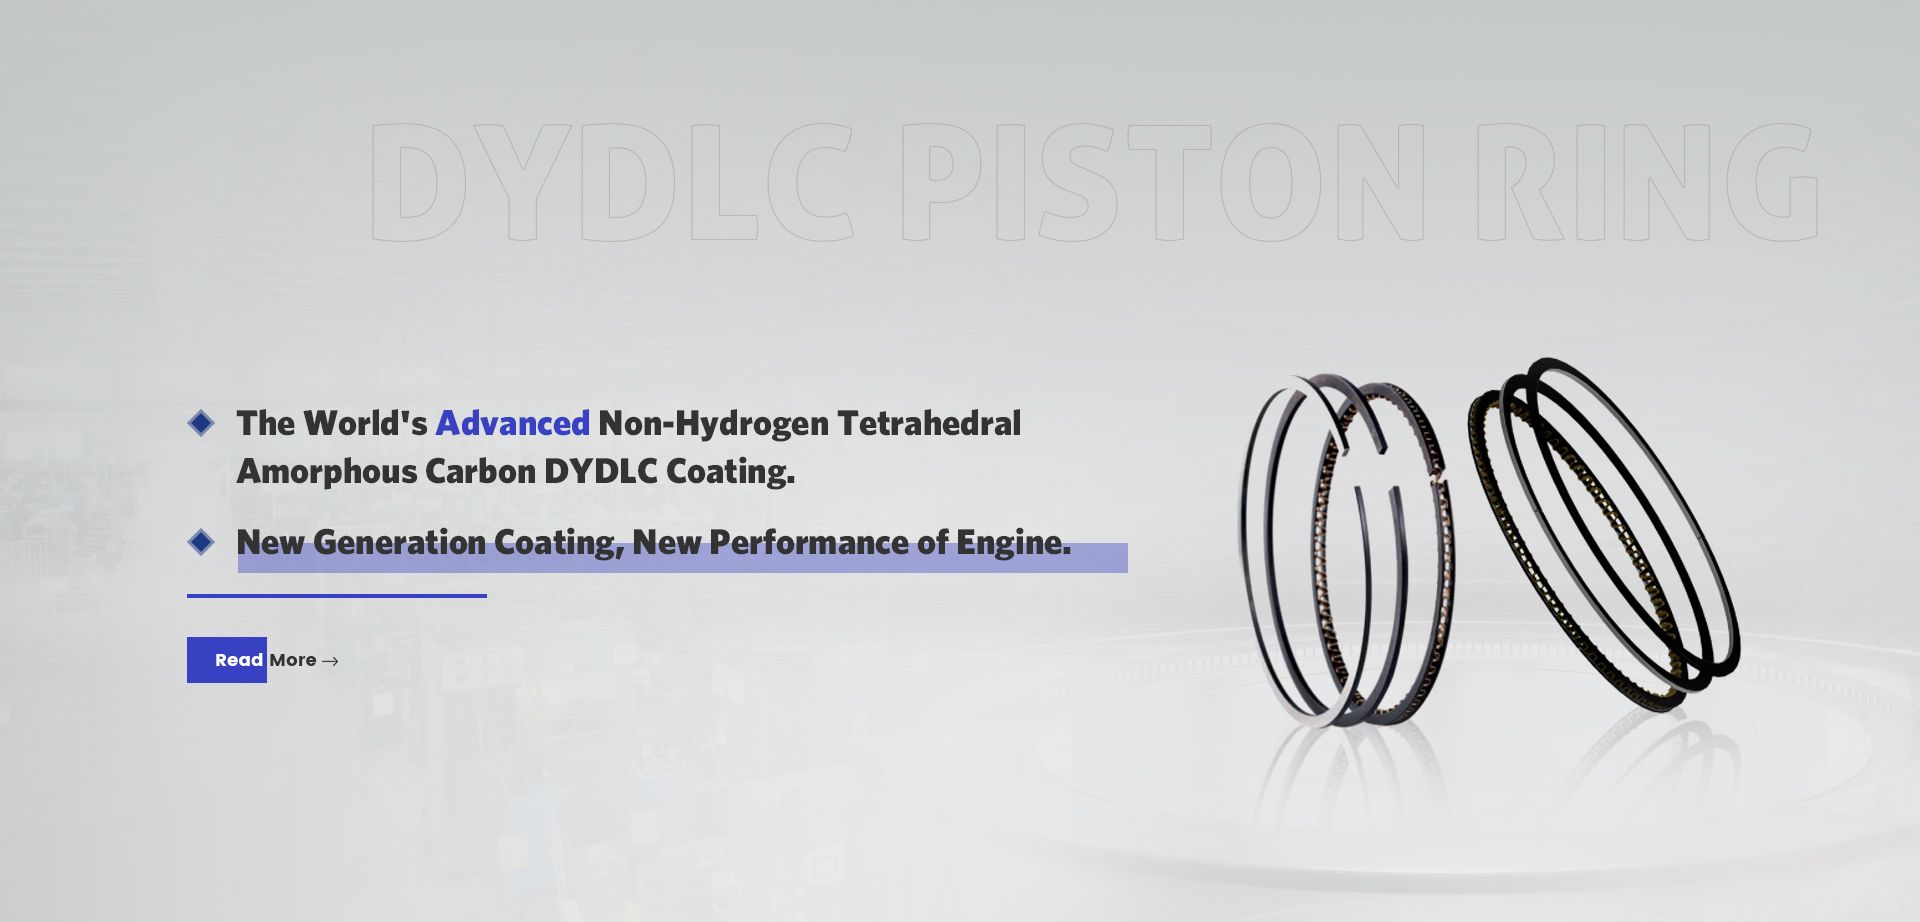 DYDLC Piston Ring